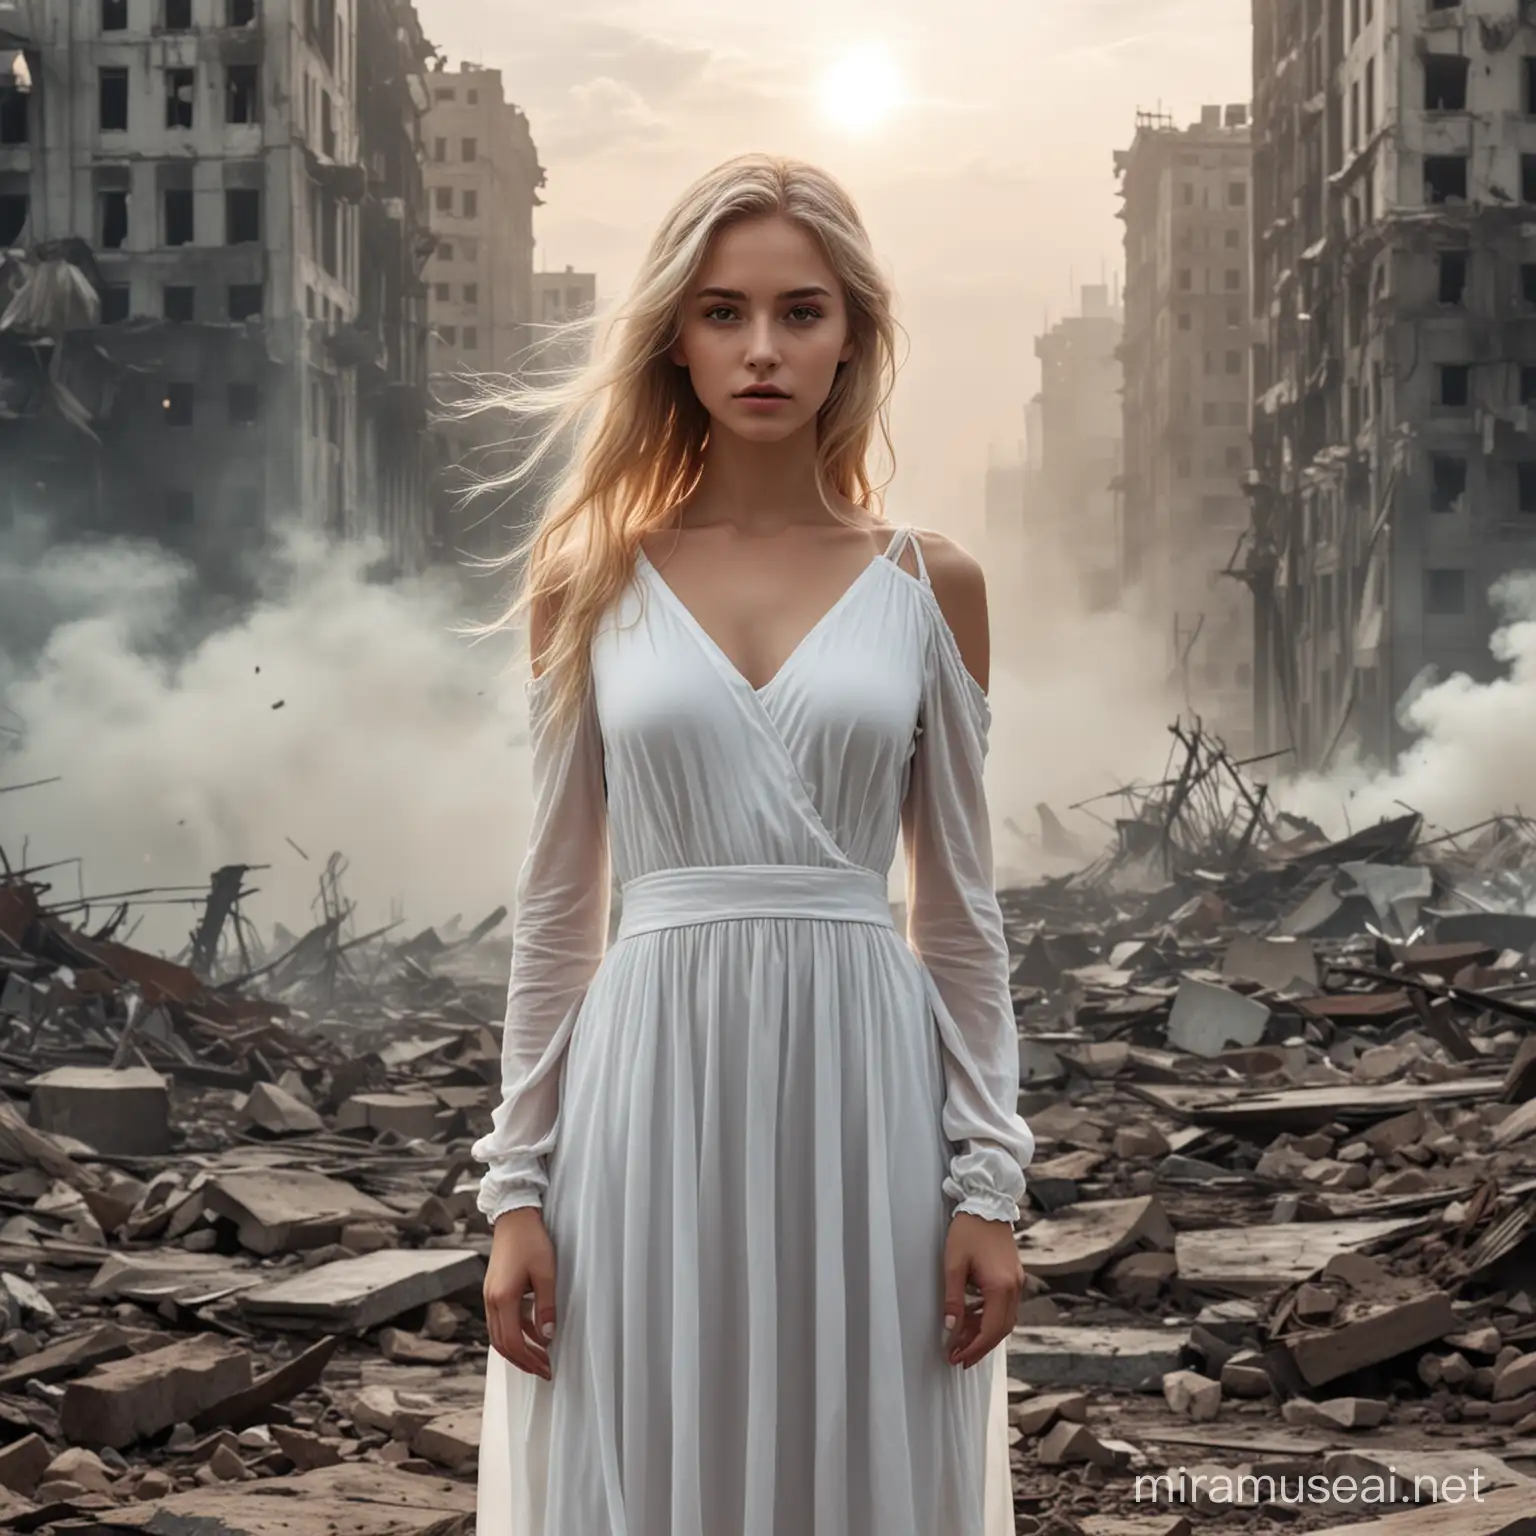 Girl in White Dress Amid Apocalypse